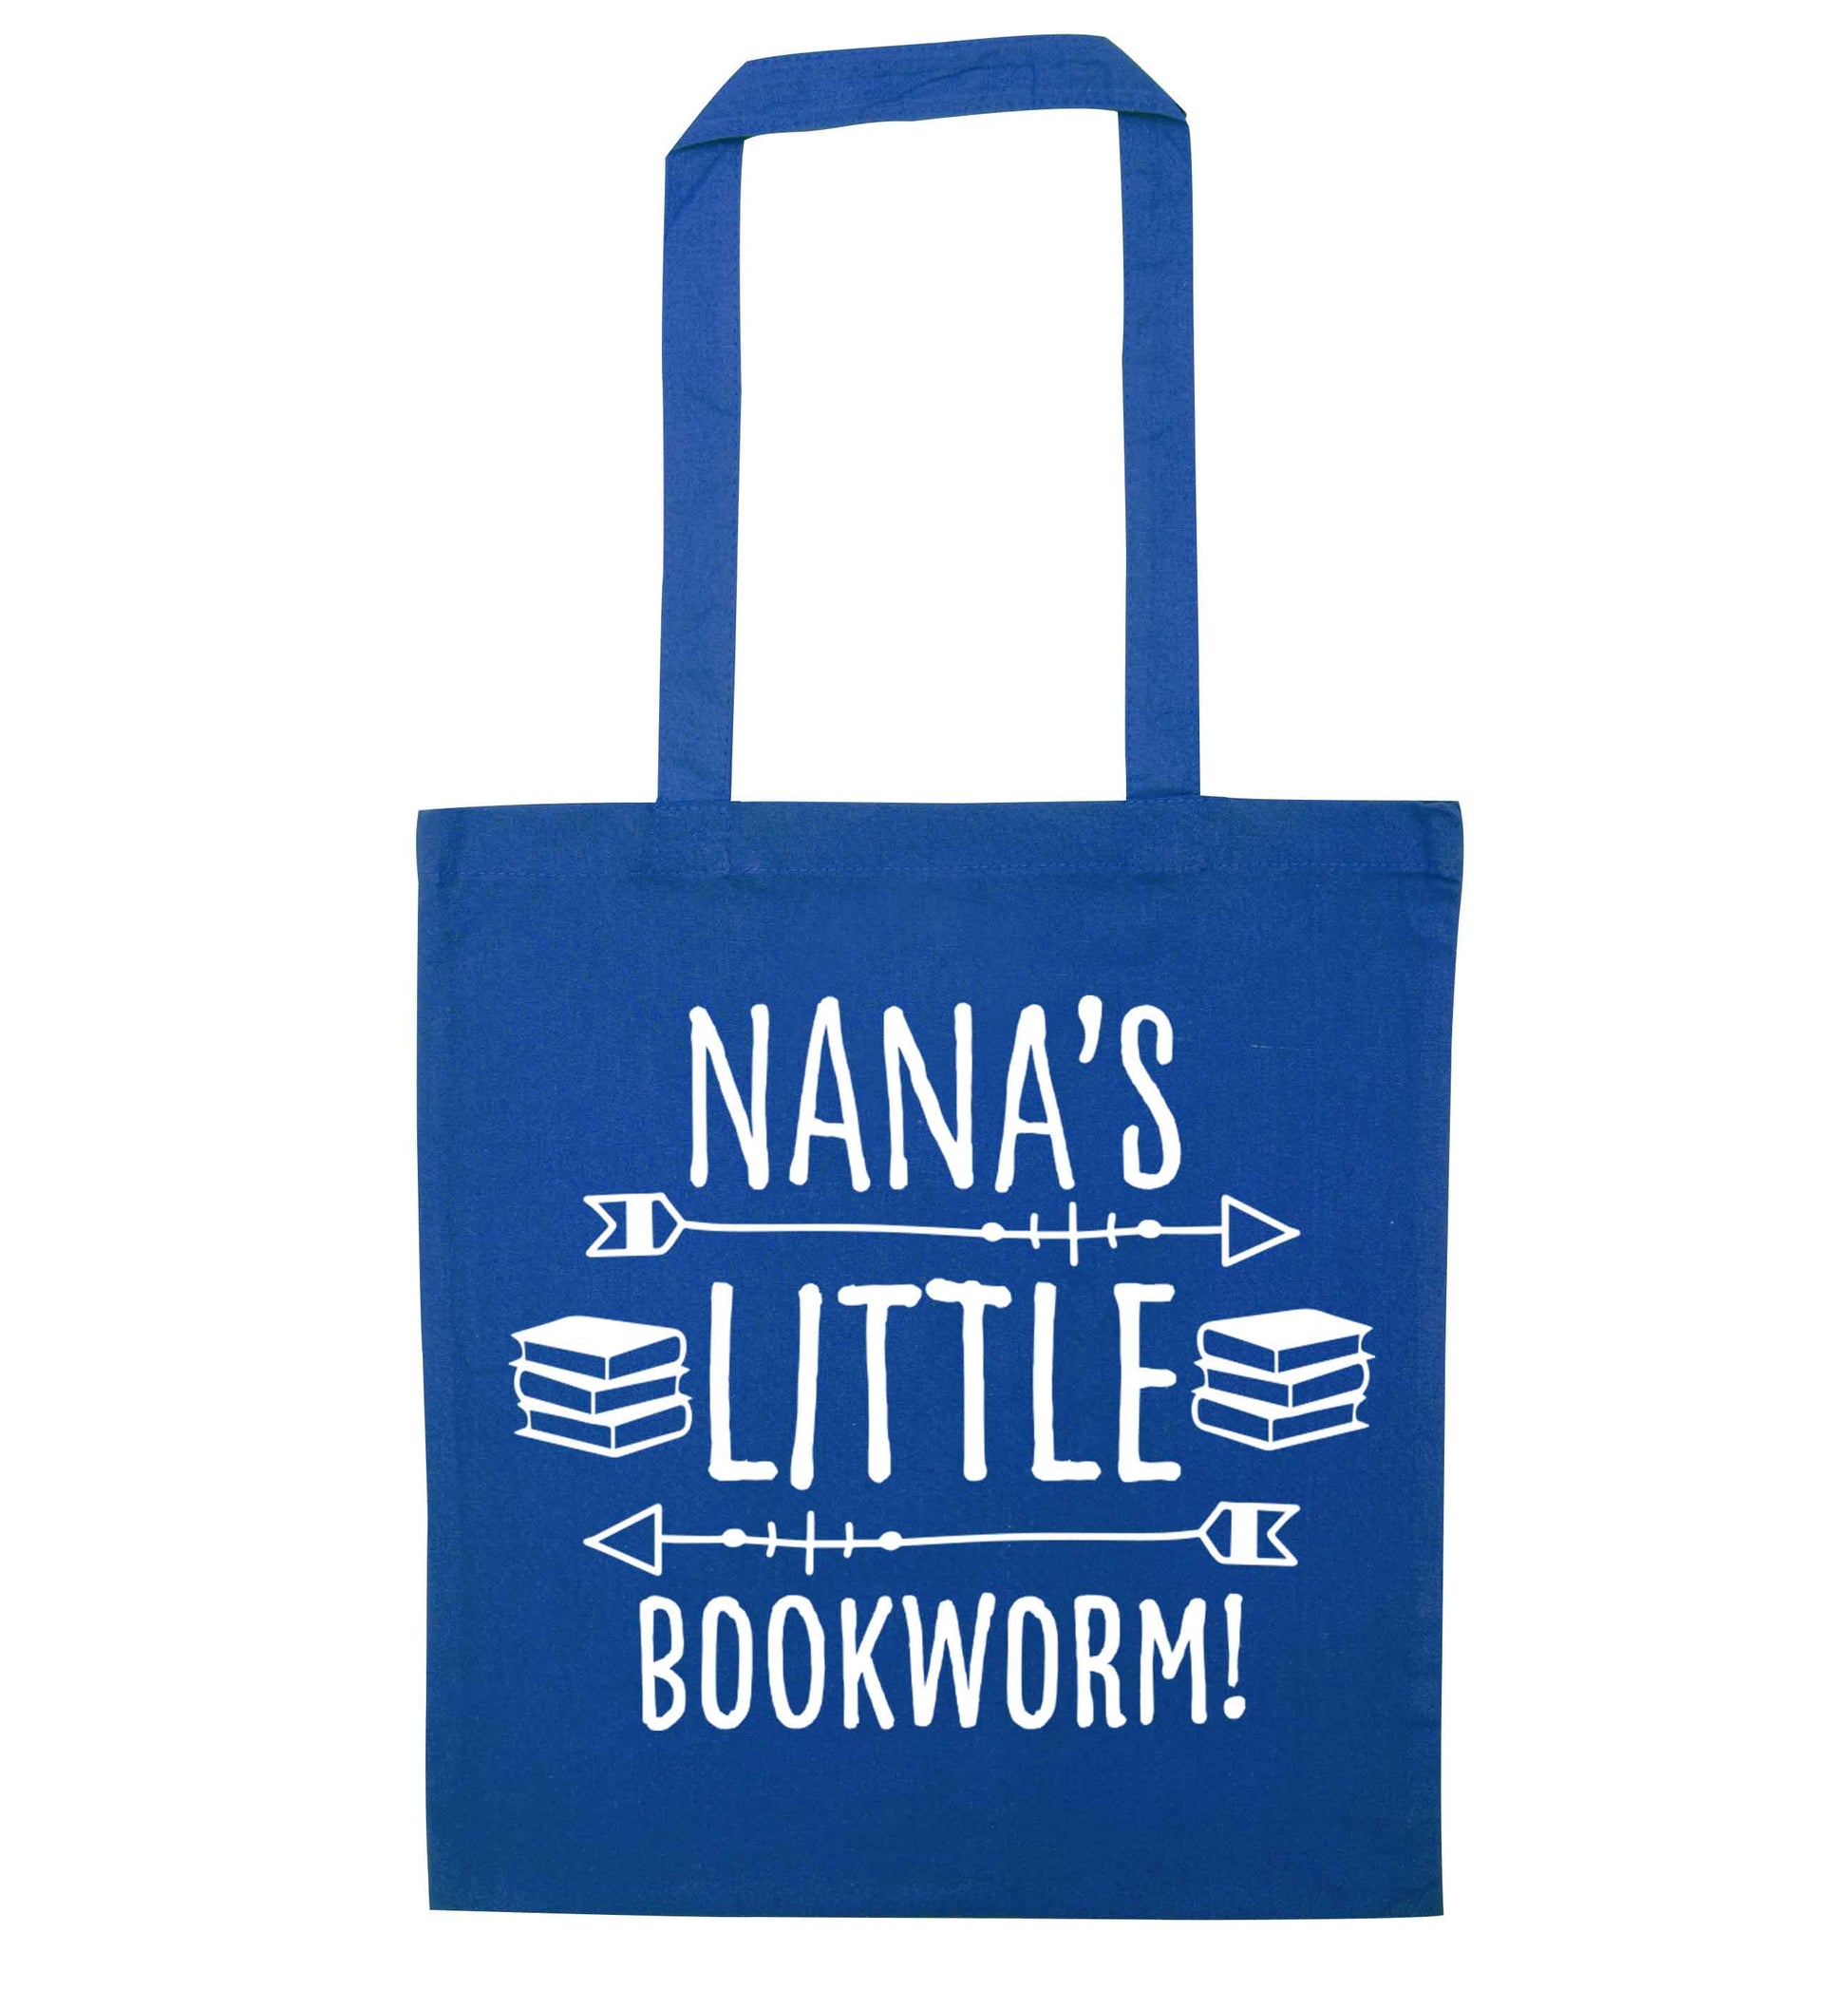 Nana's little bookworm blue tote bag